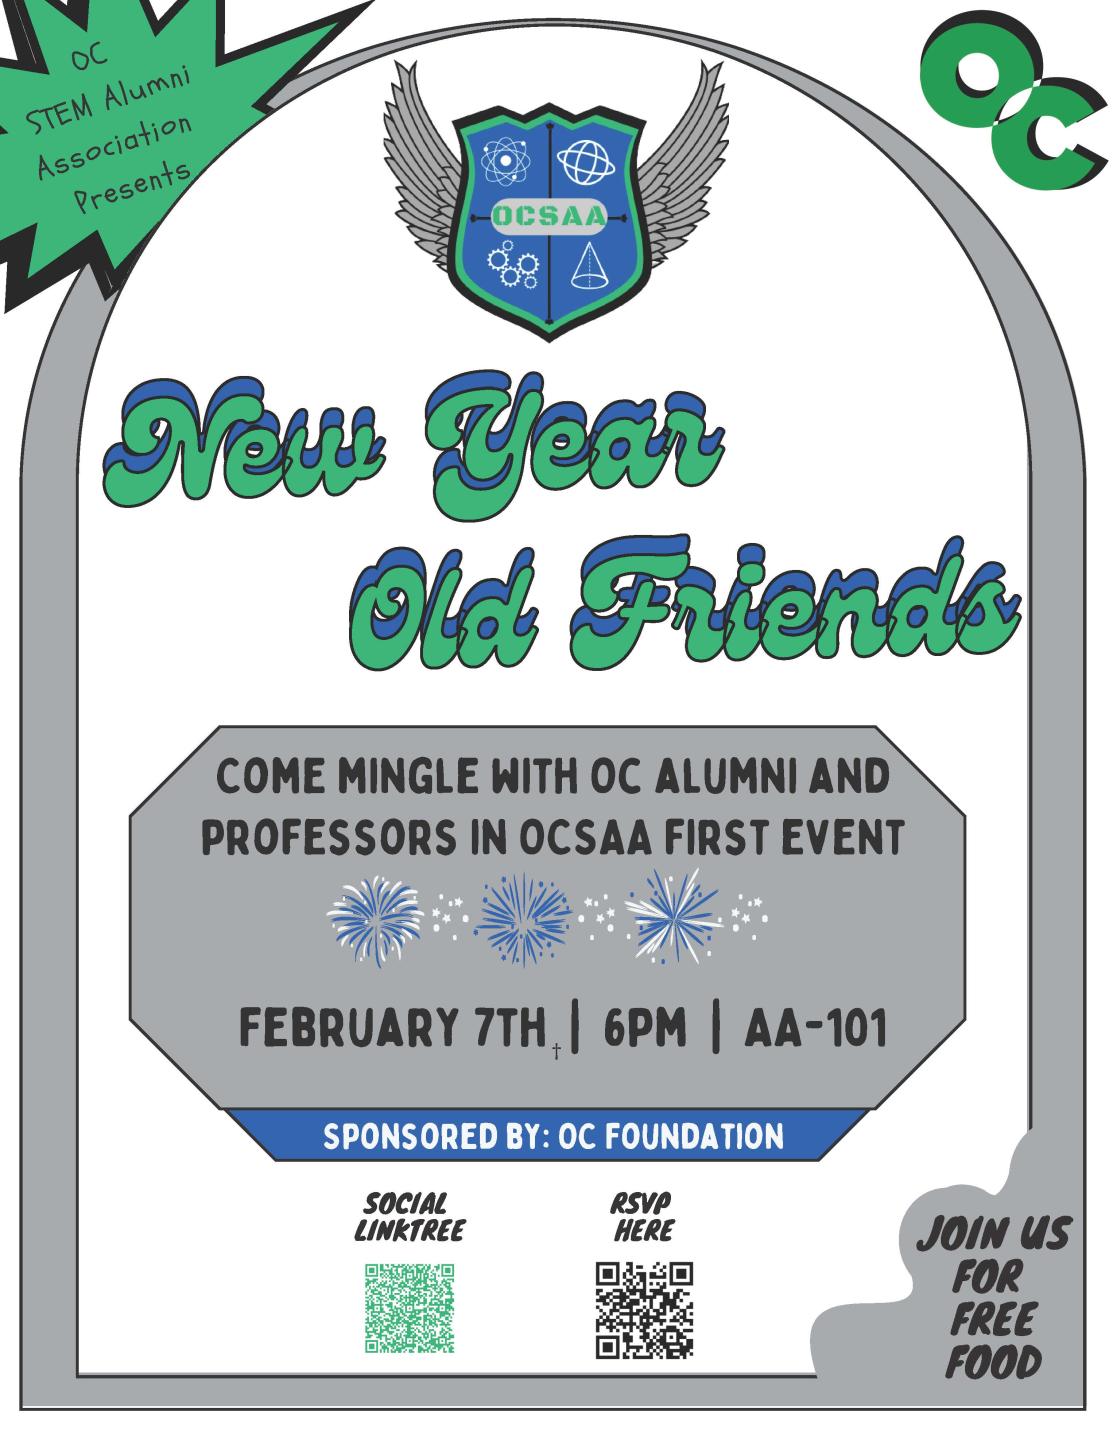 OC STEM Alumni first event invitation flyer